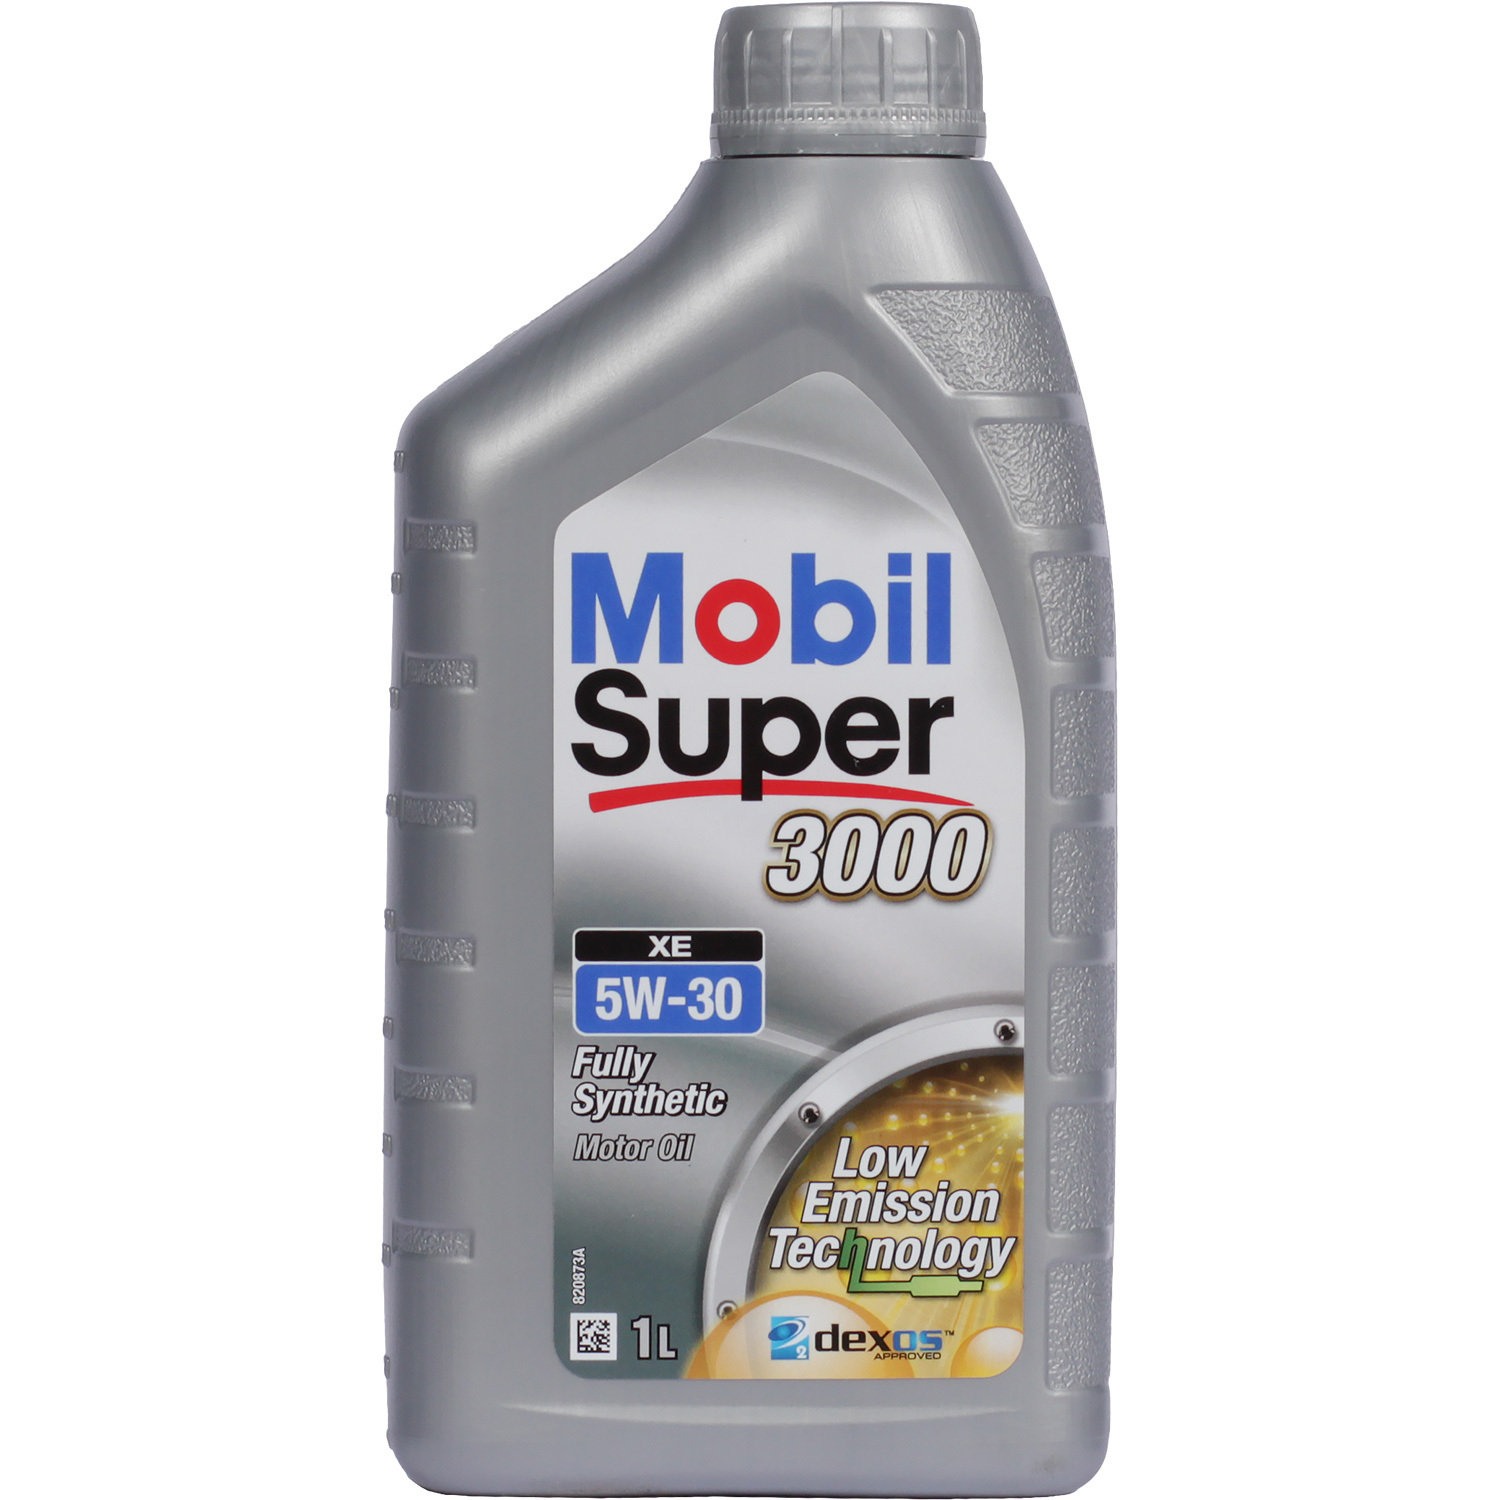 Mobil Моторное масло Mobil Super 3000 XE 5W-30, 1 л масло моторное mobil super 3000 xe 5w–30 синтетическое 1 л